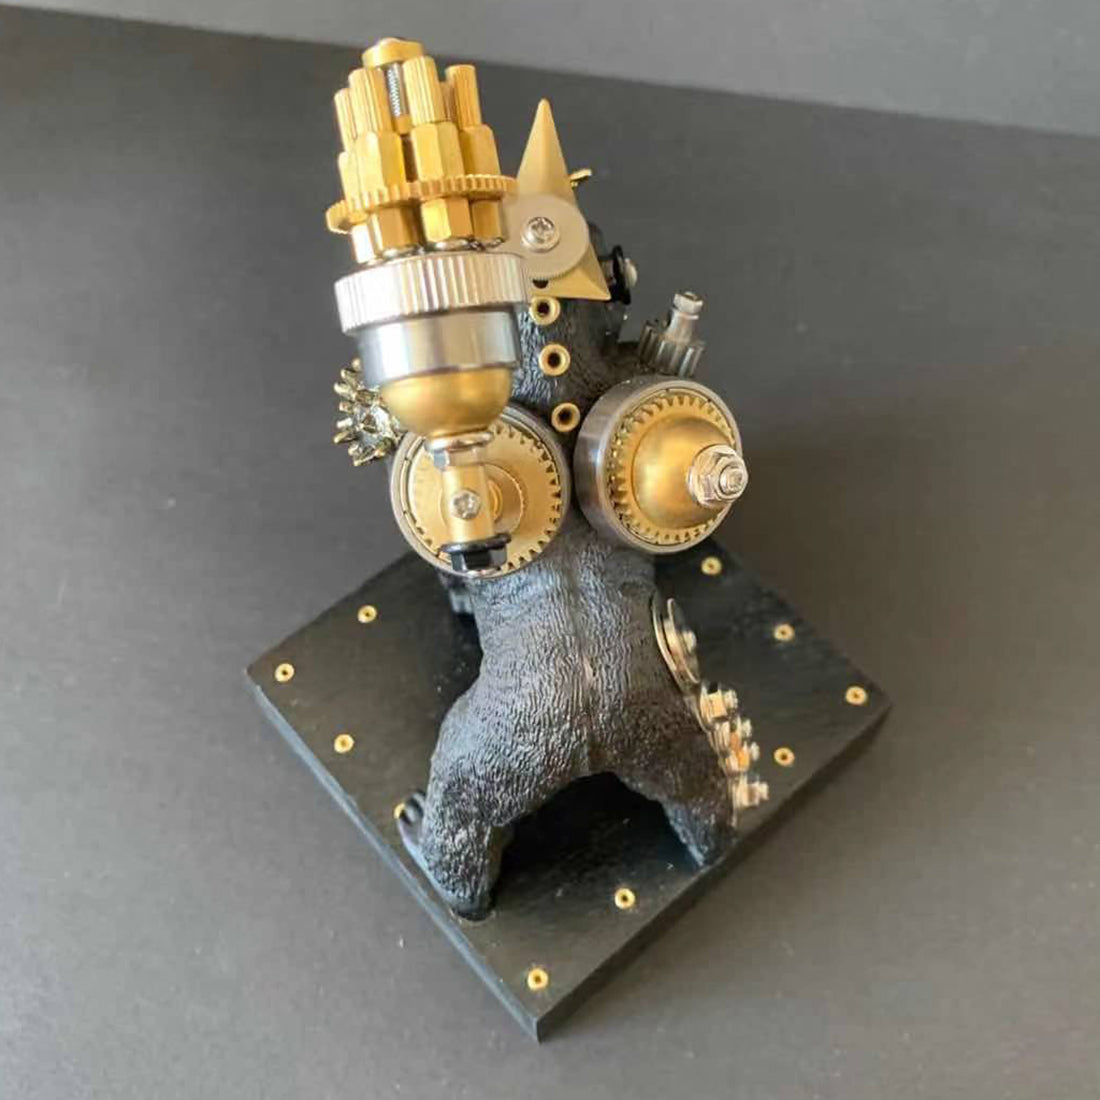 Steampunk Style Metal Orangutan King Animal Model 3D Assembled Crafts